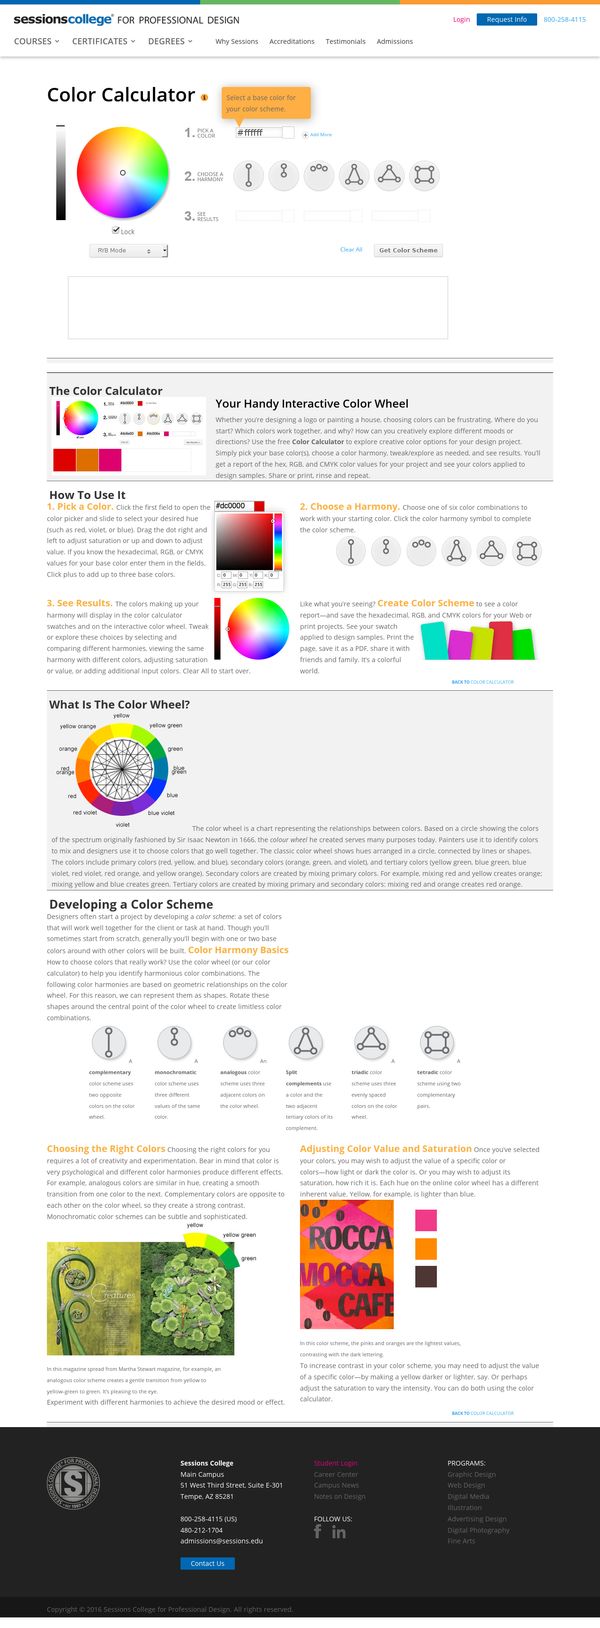 Color Wheel - Color Calculator | Sessions College